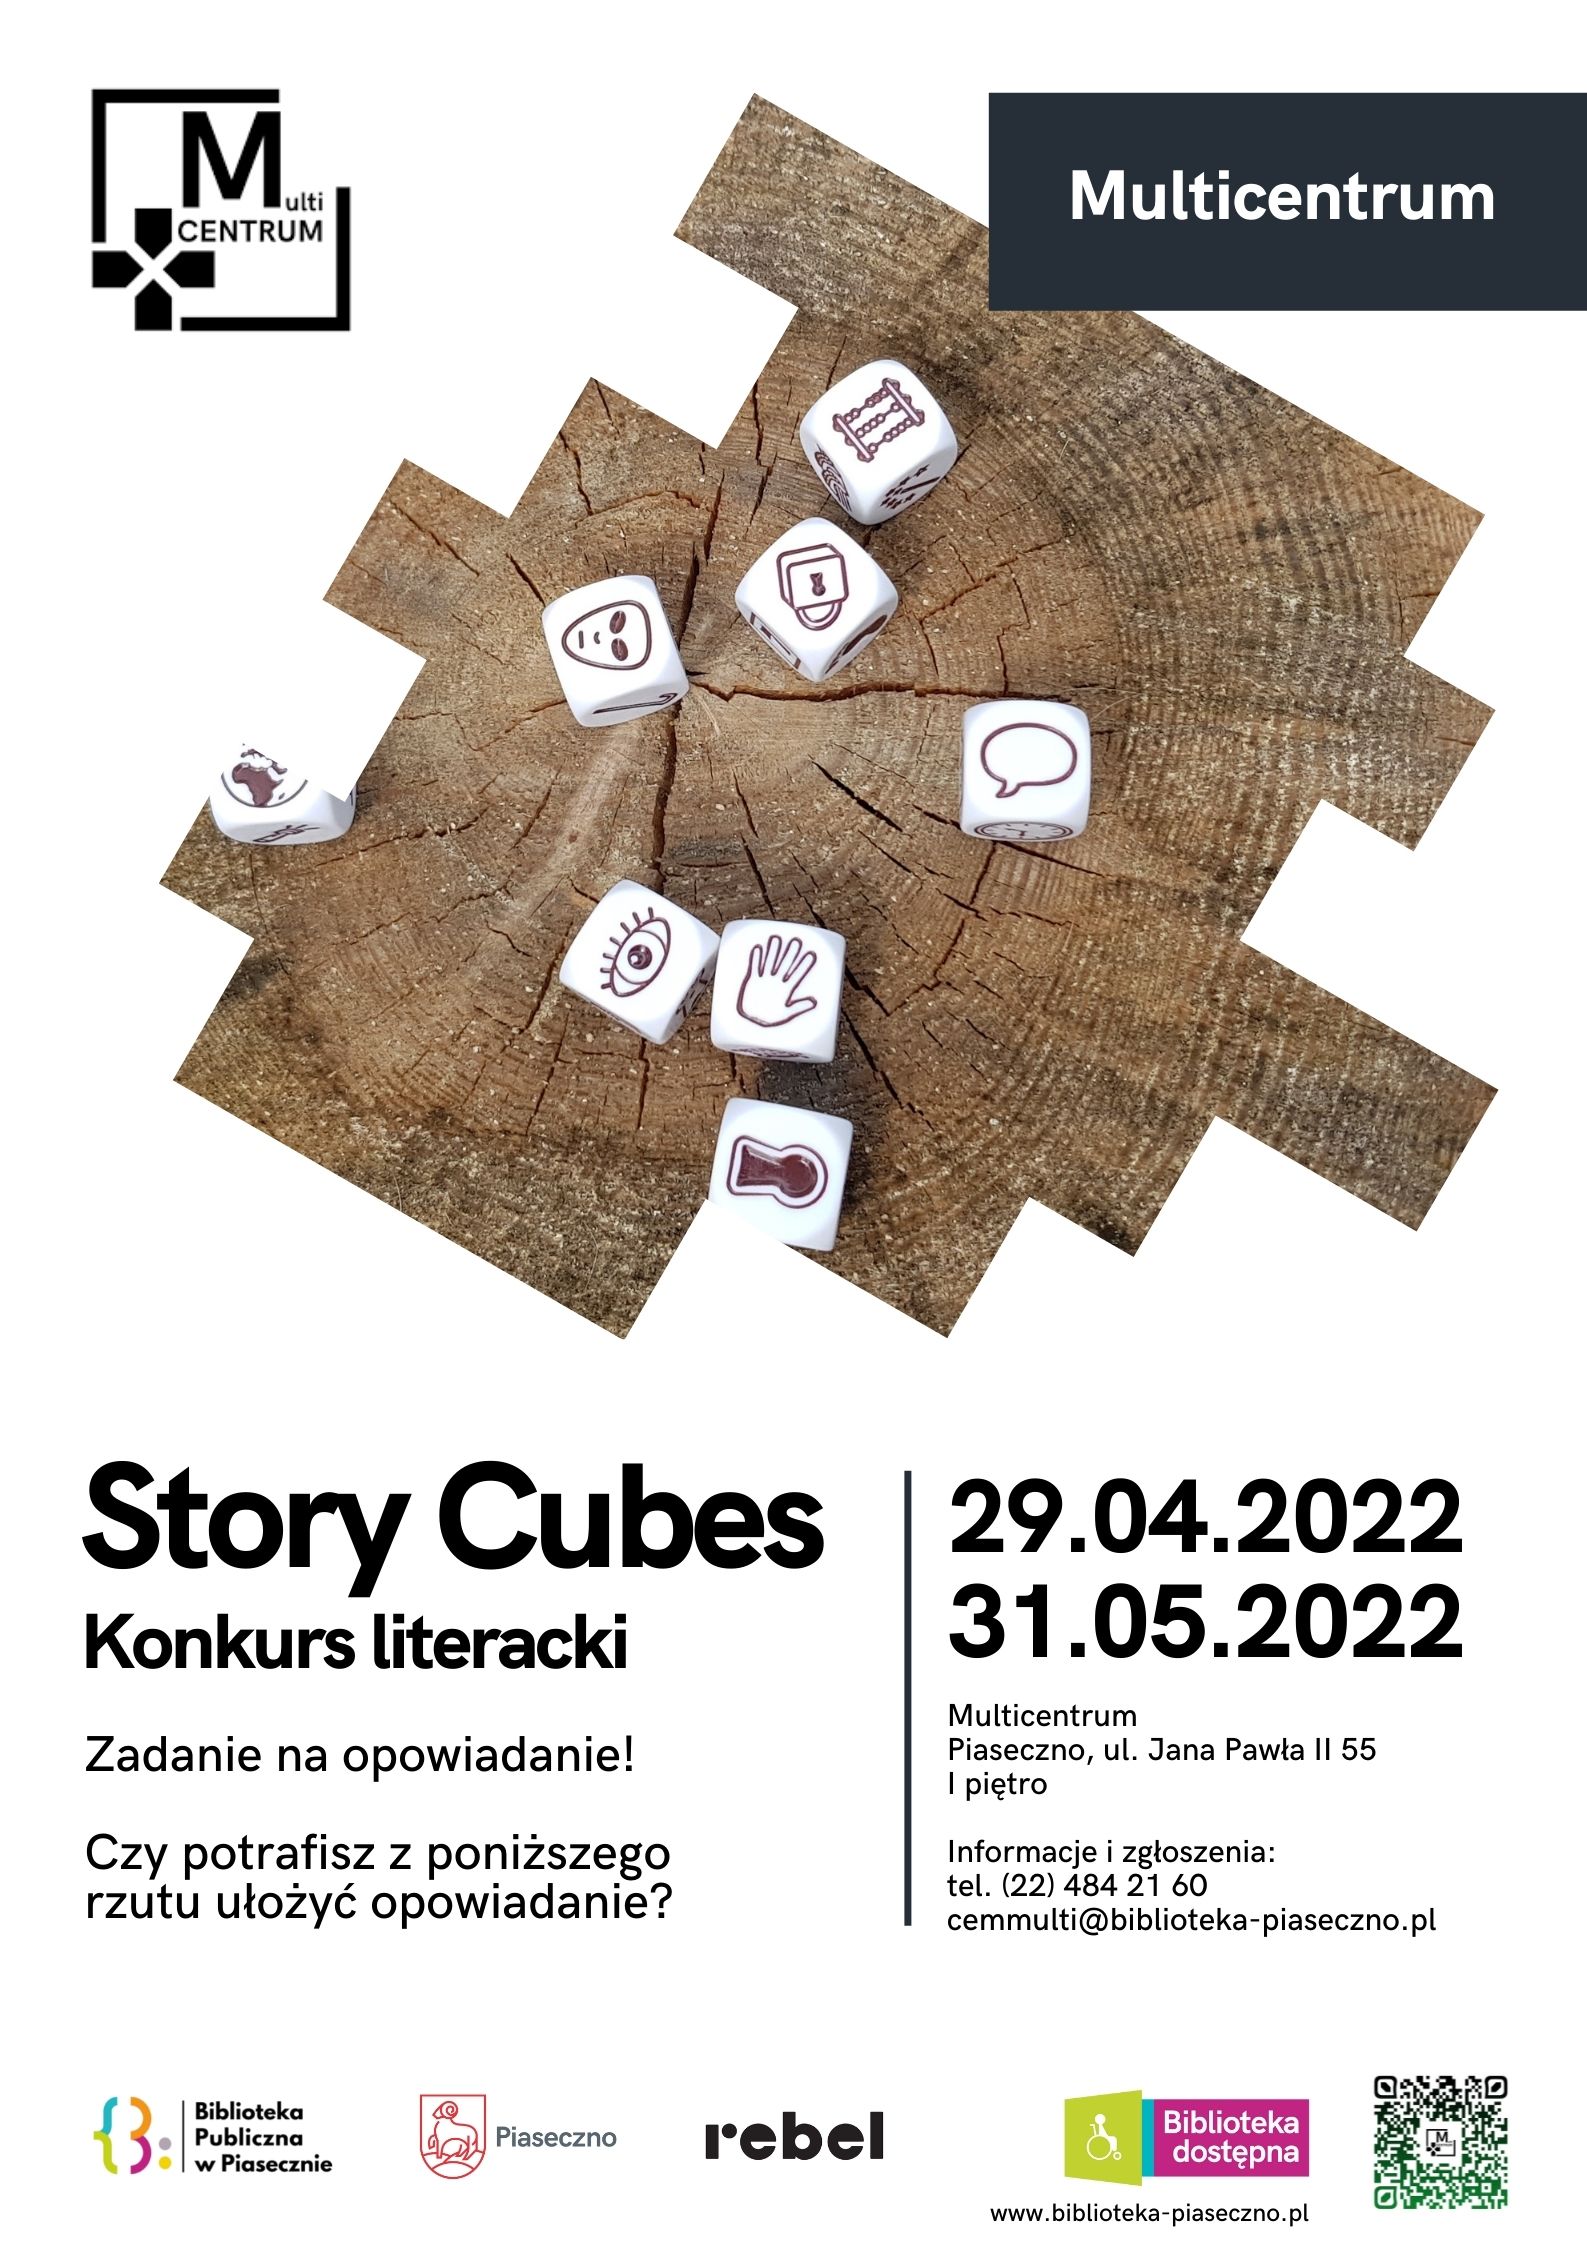 Story Cubes – konkurs literacki